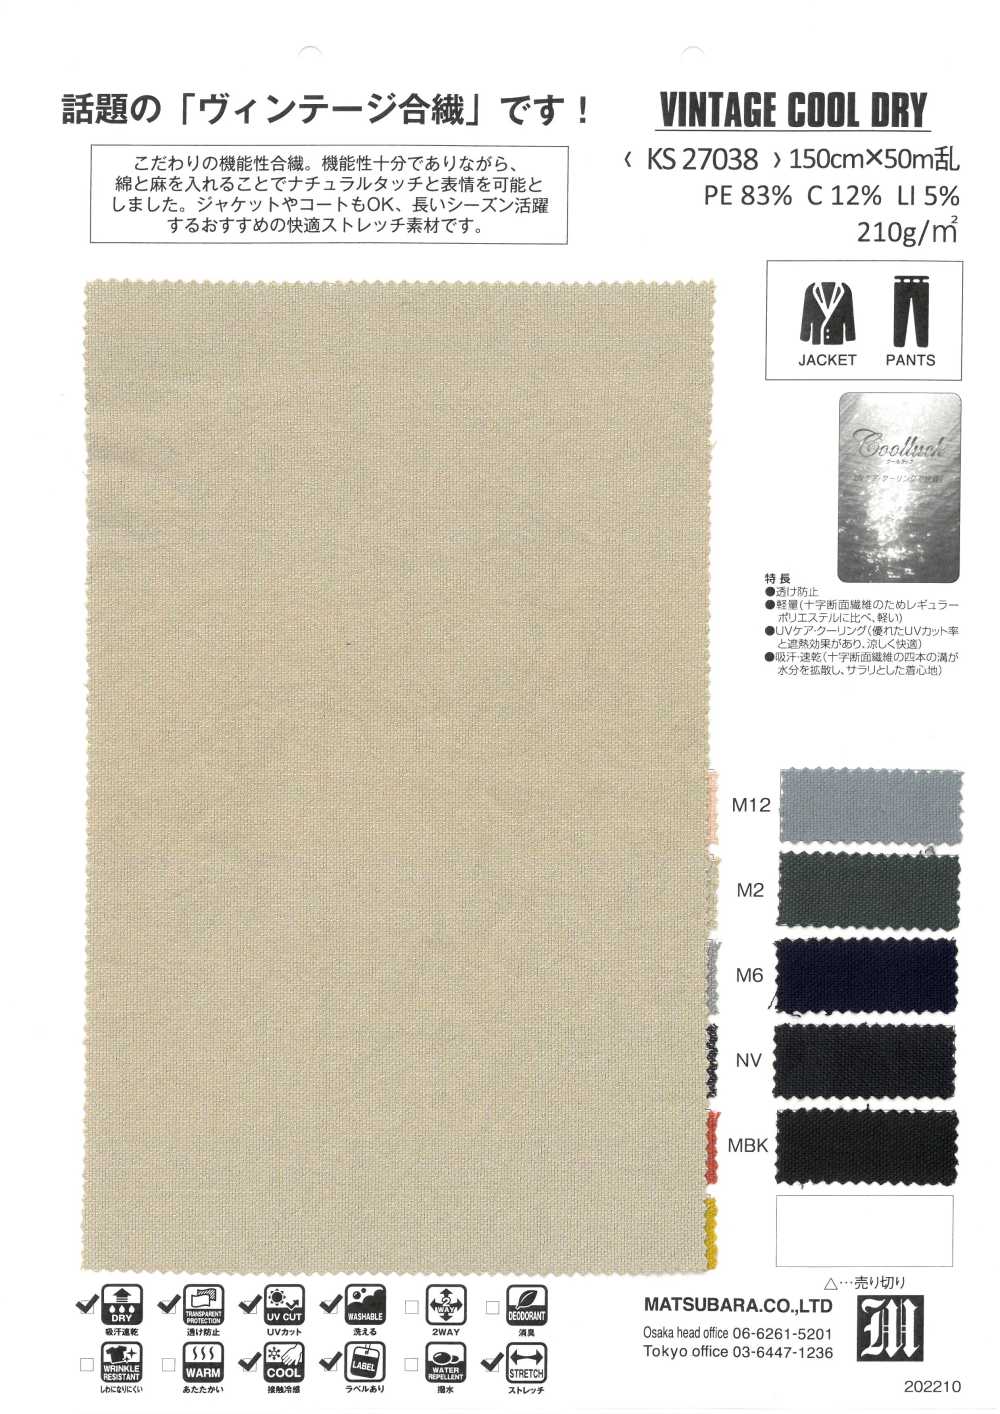 KS27038 VINTAGE FRESCO SECO[Fabrica Textil] Matsubara